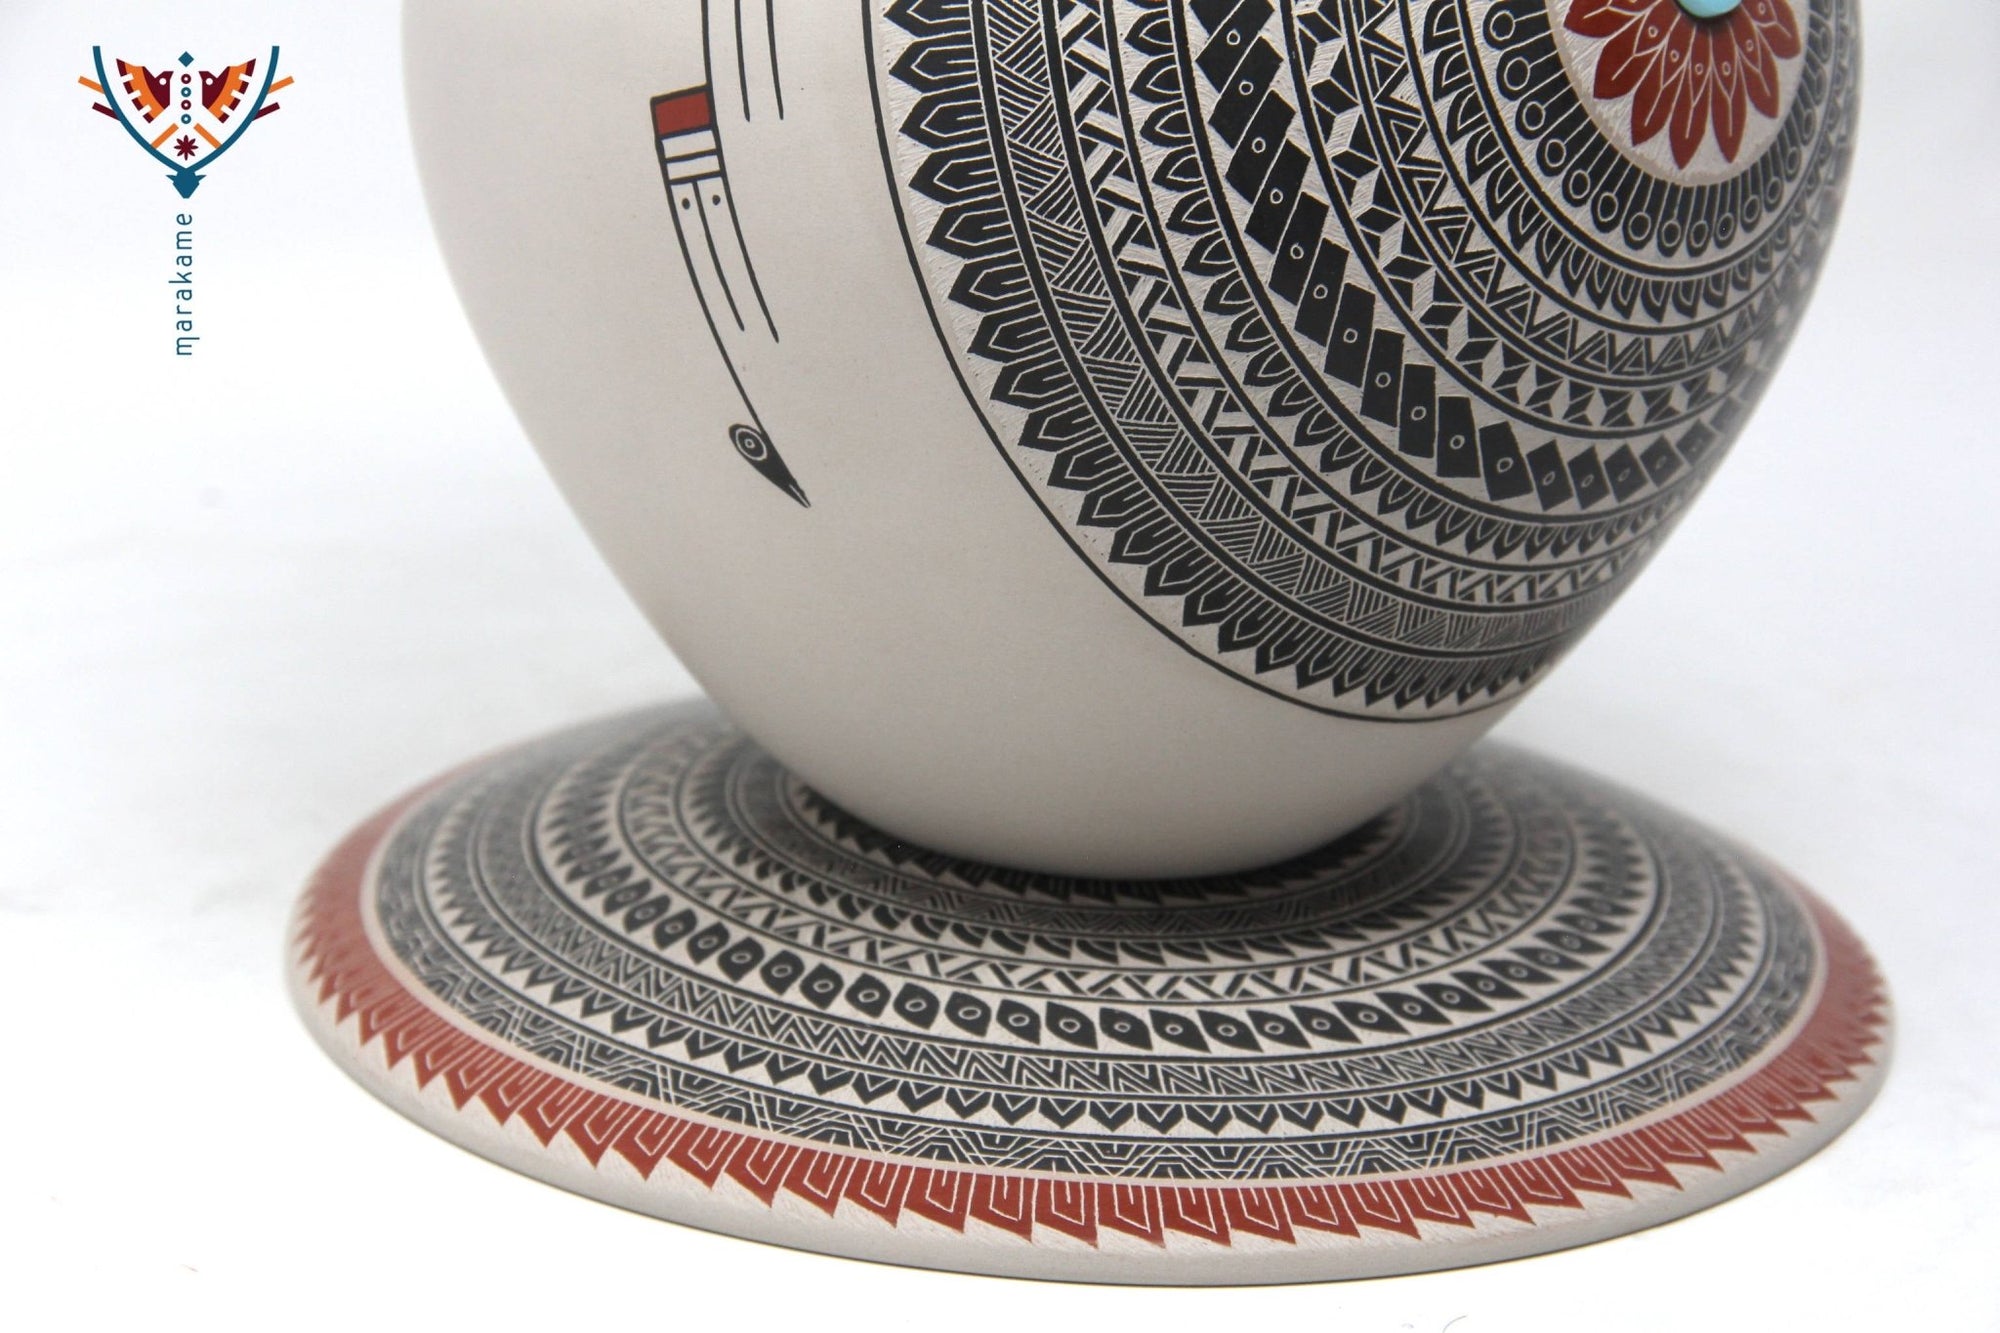 Keramik von Mata Ortiz - Diptychon-Teller und Vase - Huichol-Kunst - Marakame